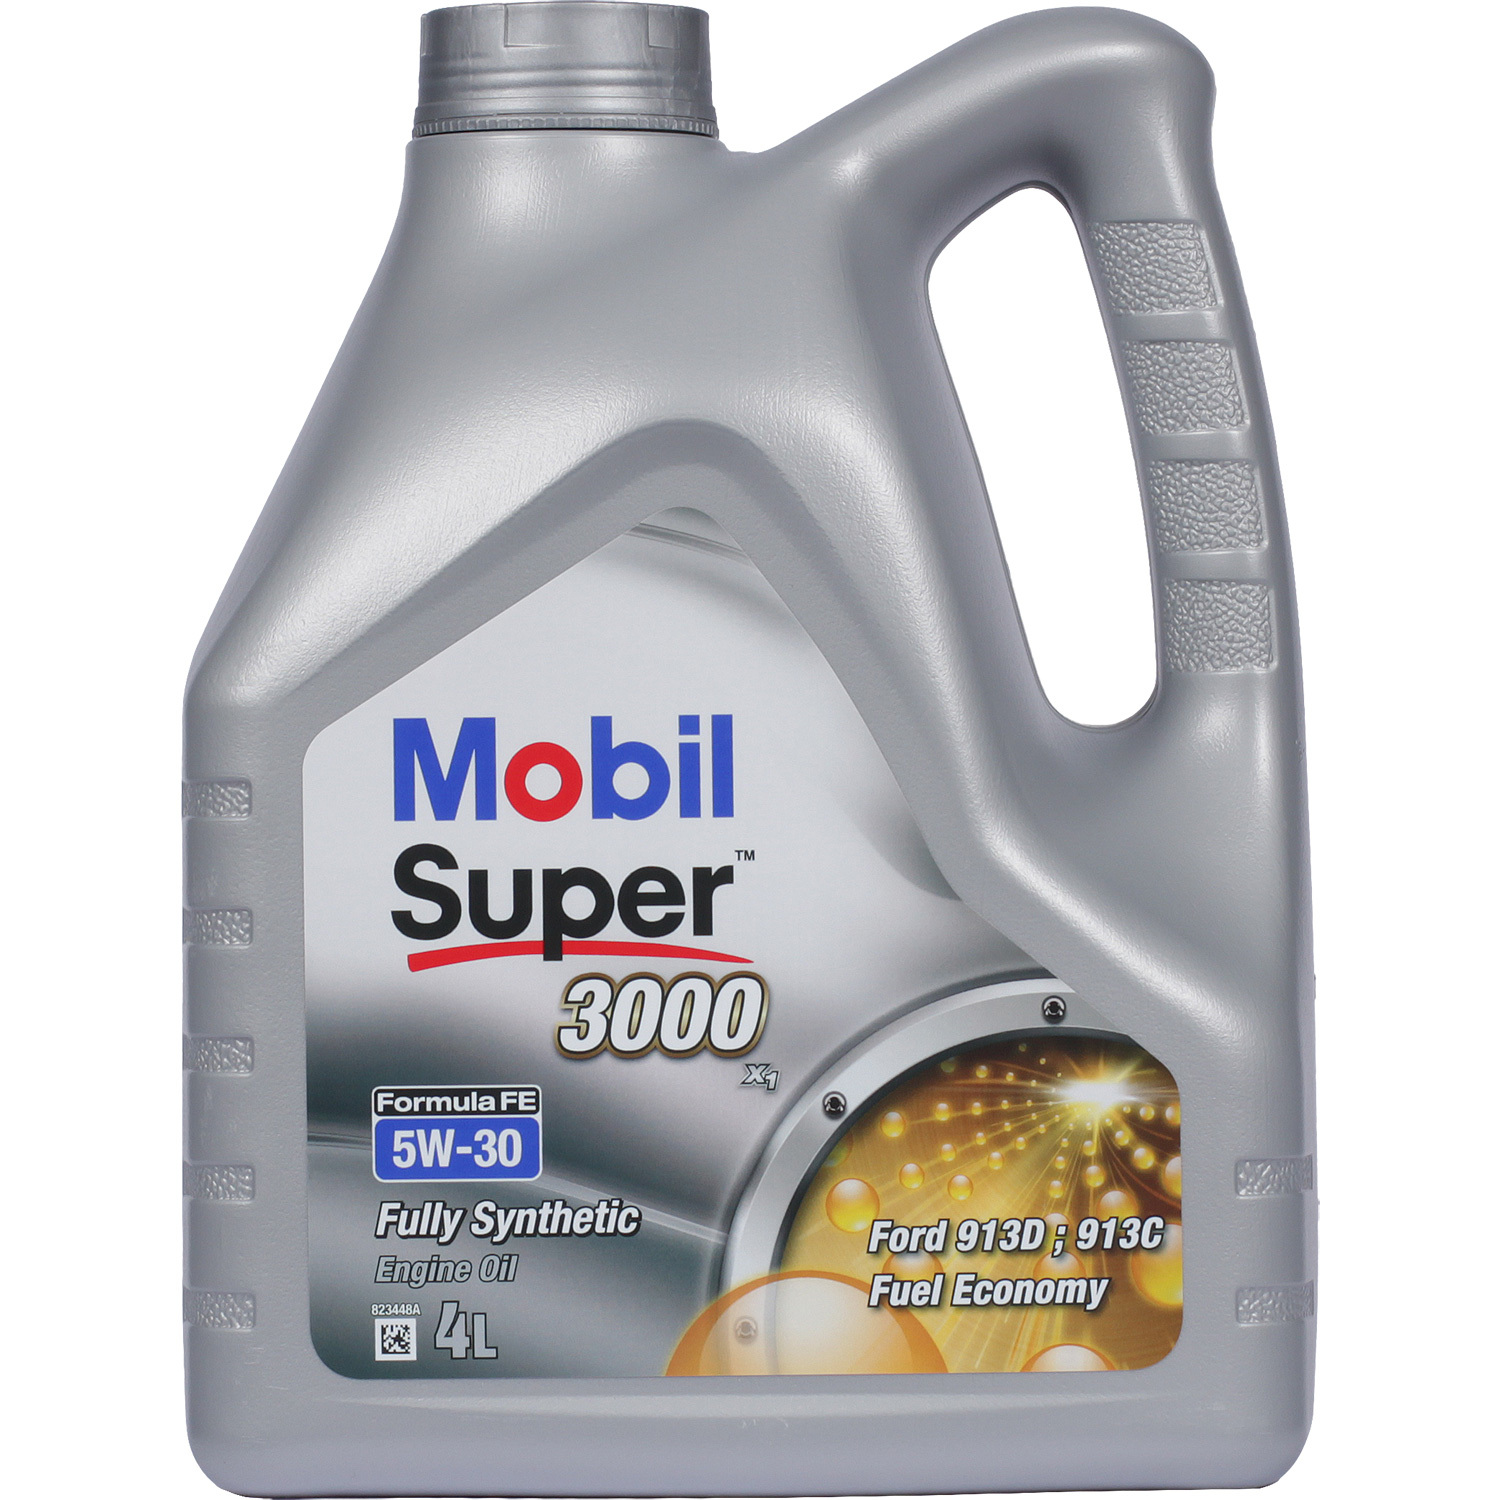 Mobil Моторное масло Mobil Super 3000 X1 Formula FE 5W-30, 4 л масло моторное mobil 1 esp formula 5w 30 1 л